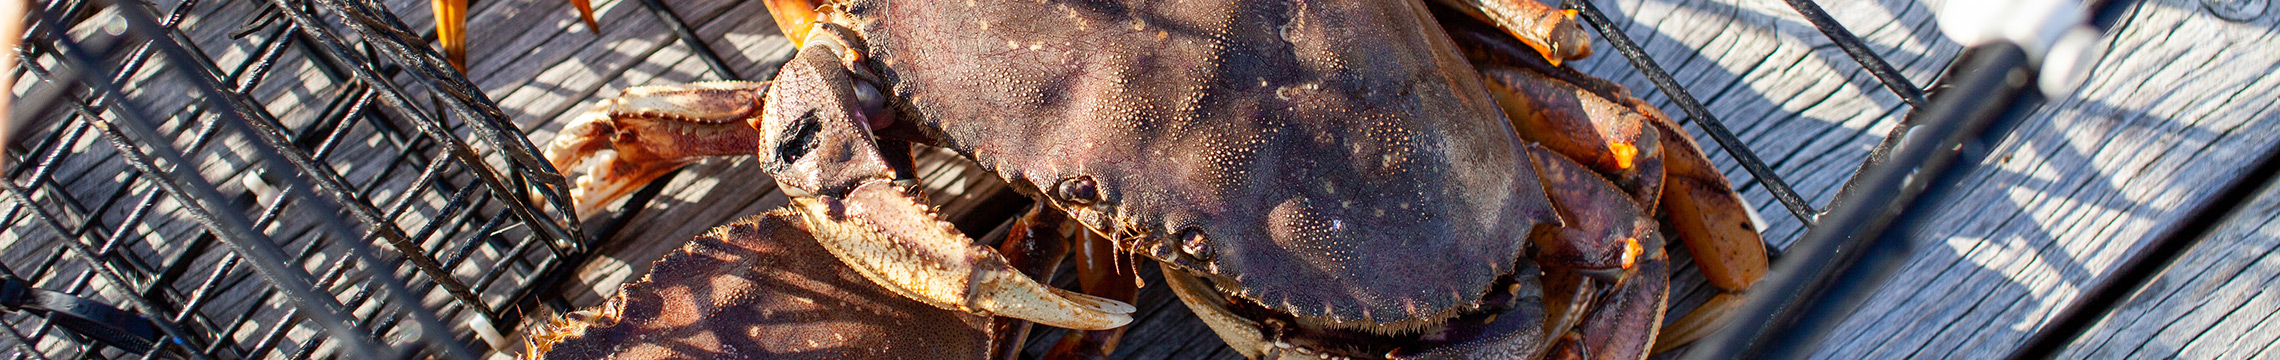 Dungeness crabs walking around a large, metal crab trap